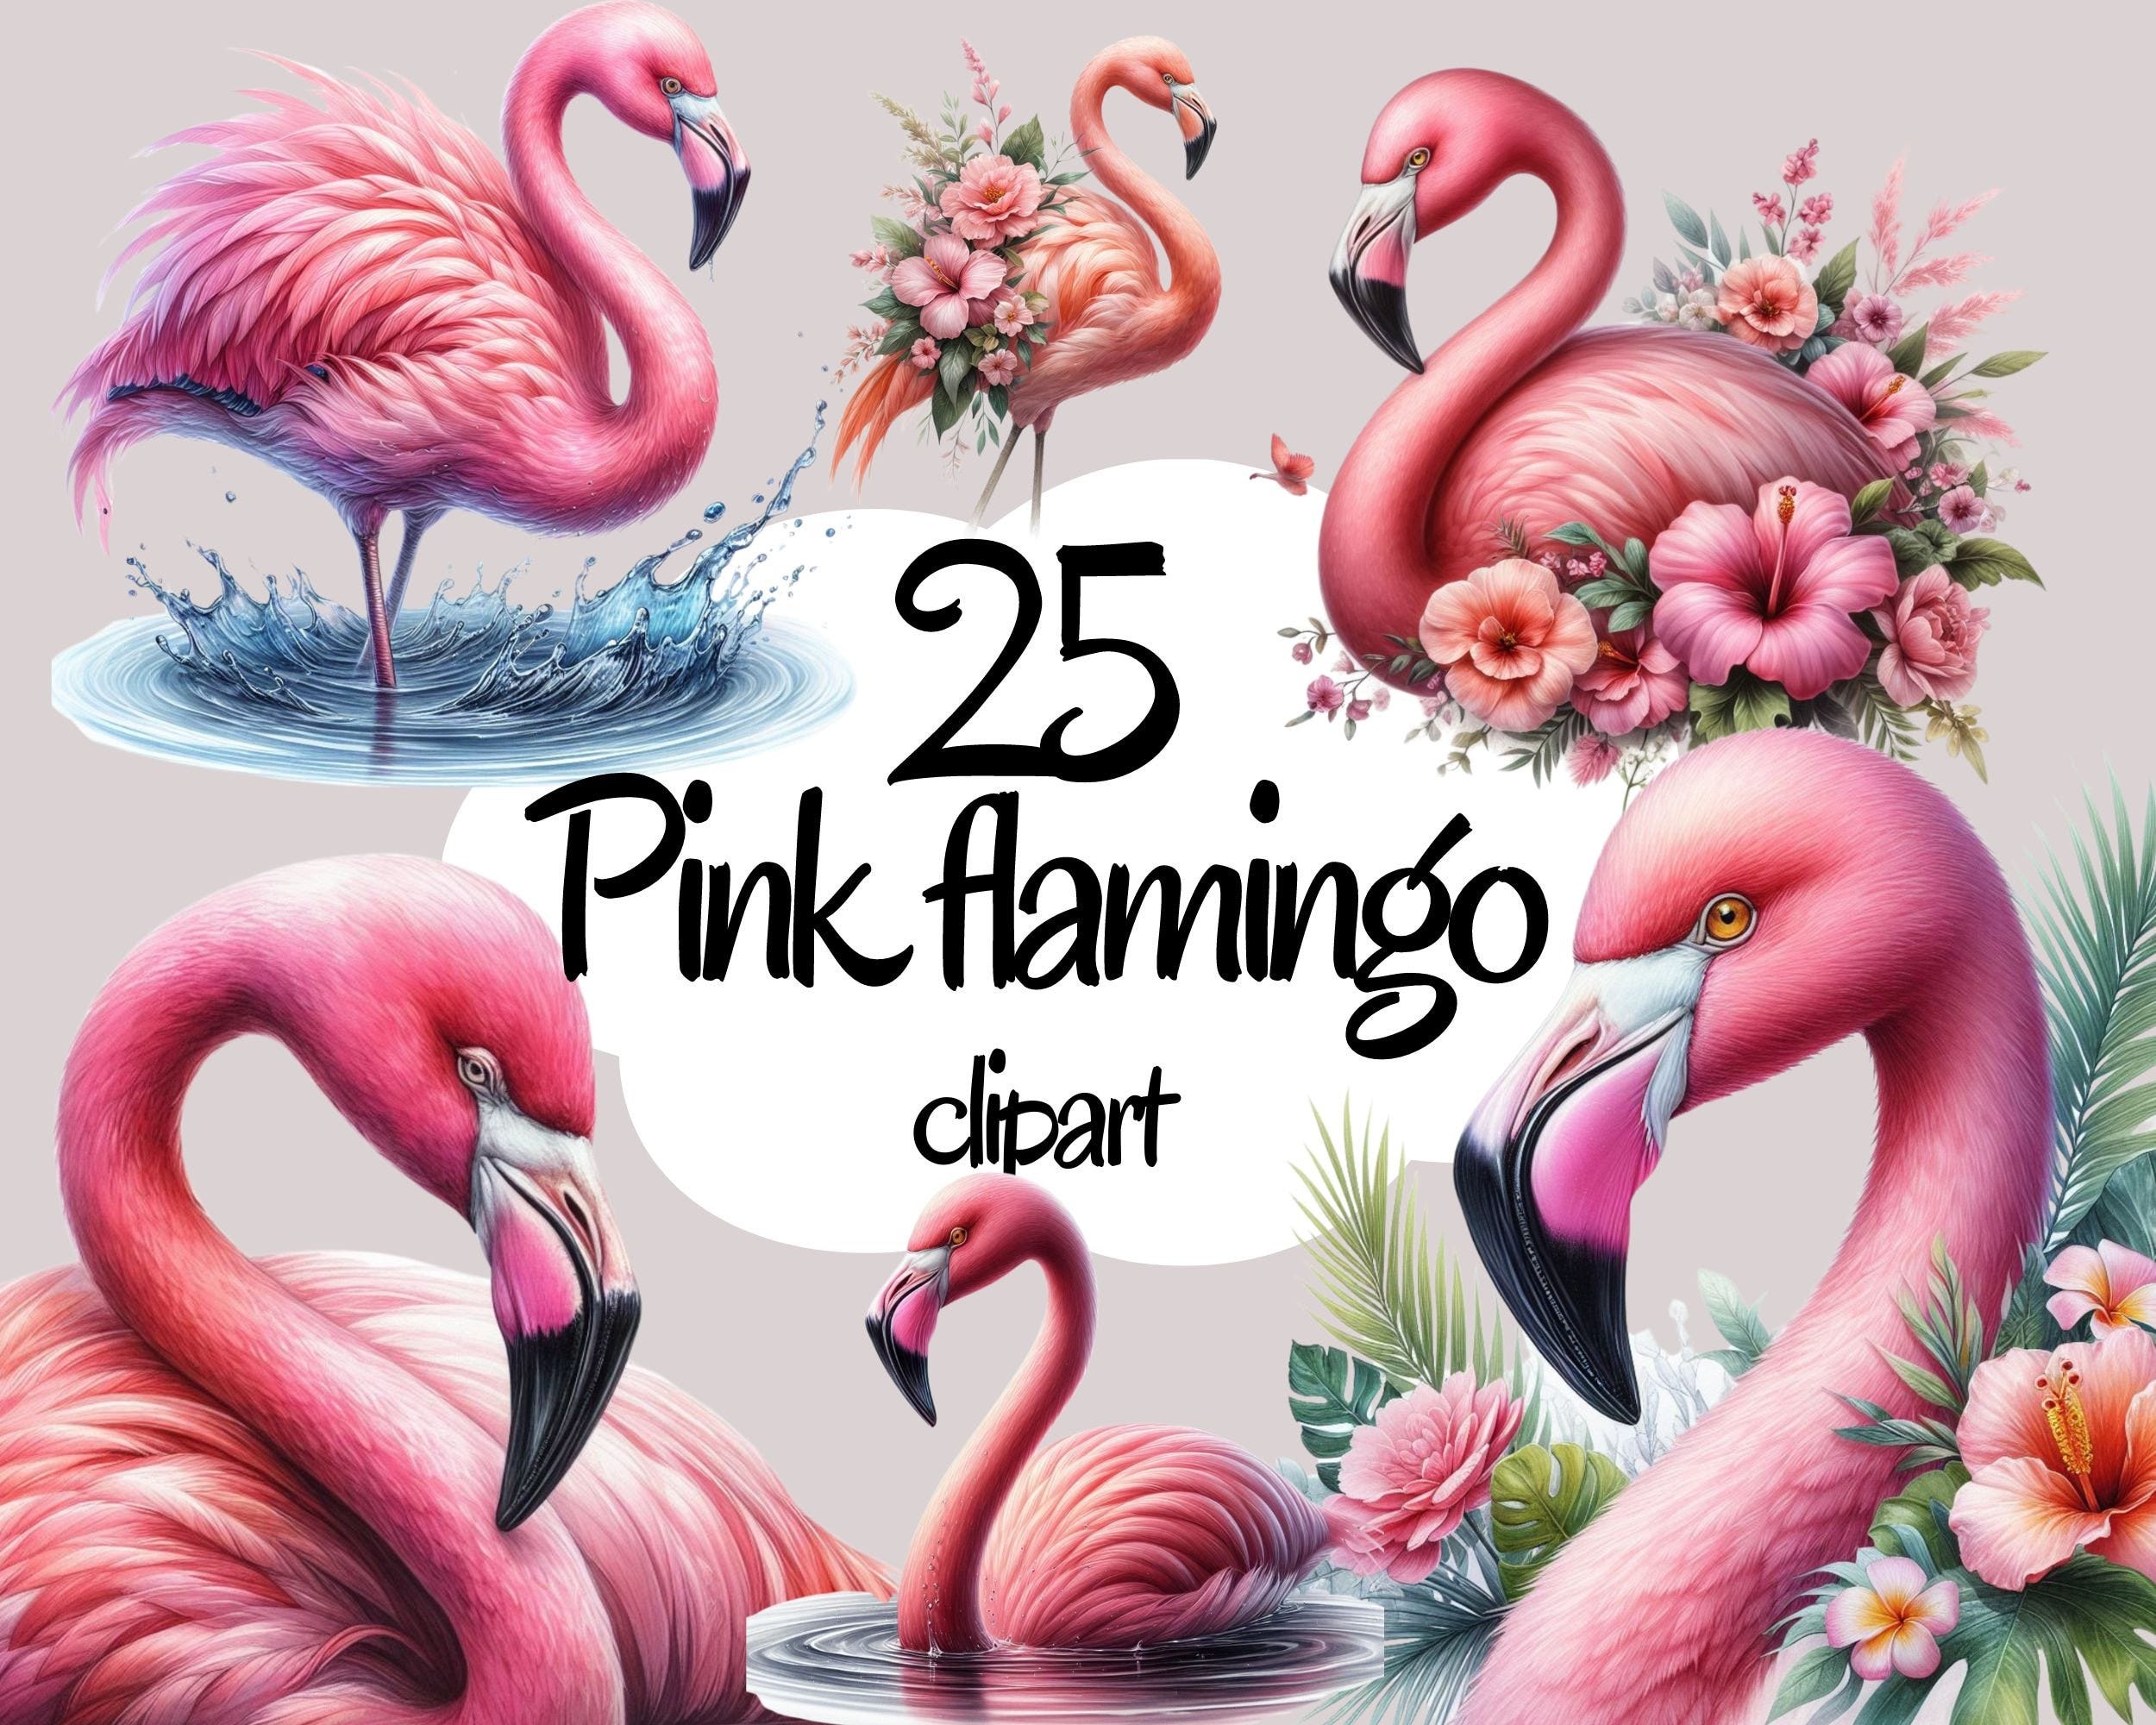 Flamingos Watercolor pink Clipart Bundle - PNG Flamingo Images, Floral Birds Graphics, Instant Digital Download, Commercial Use